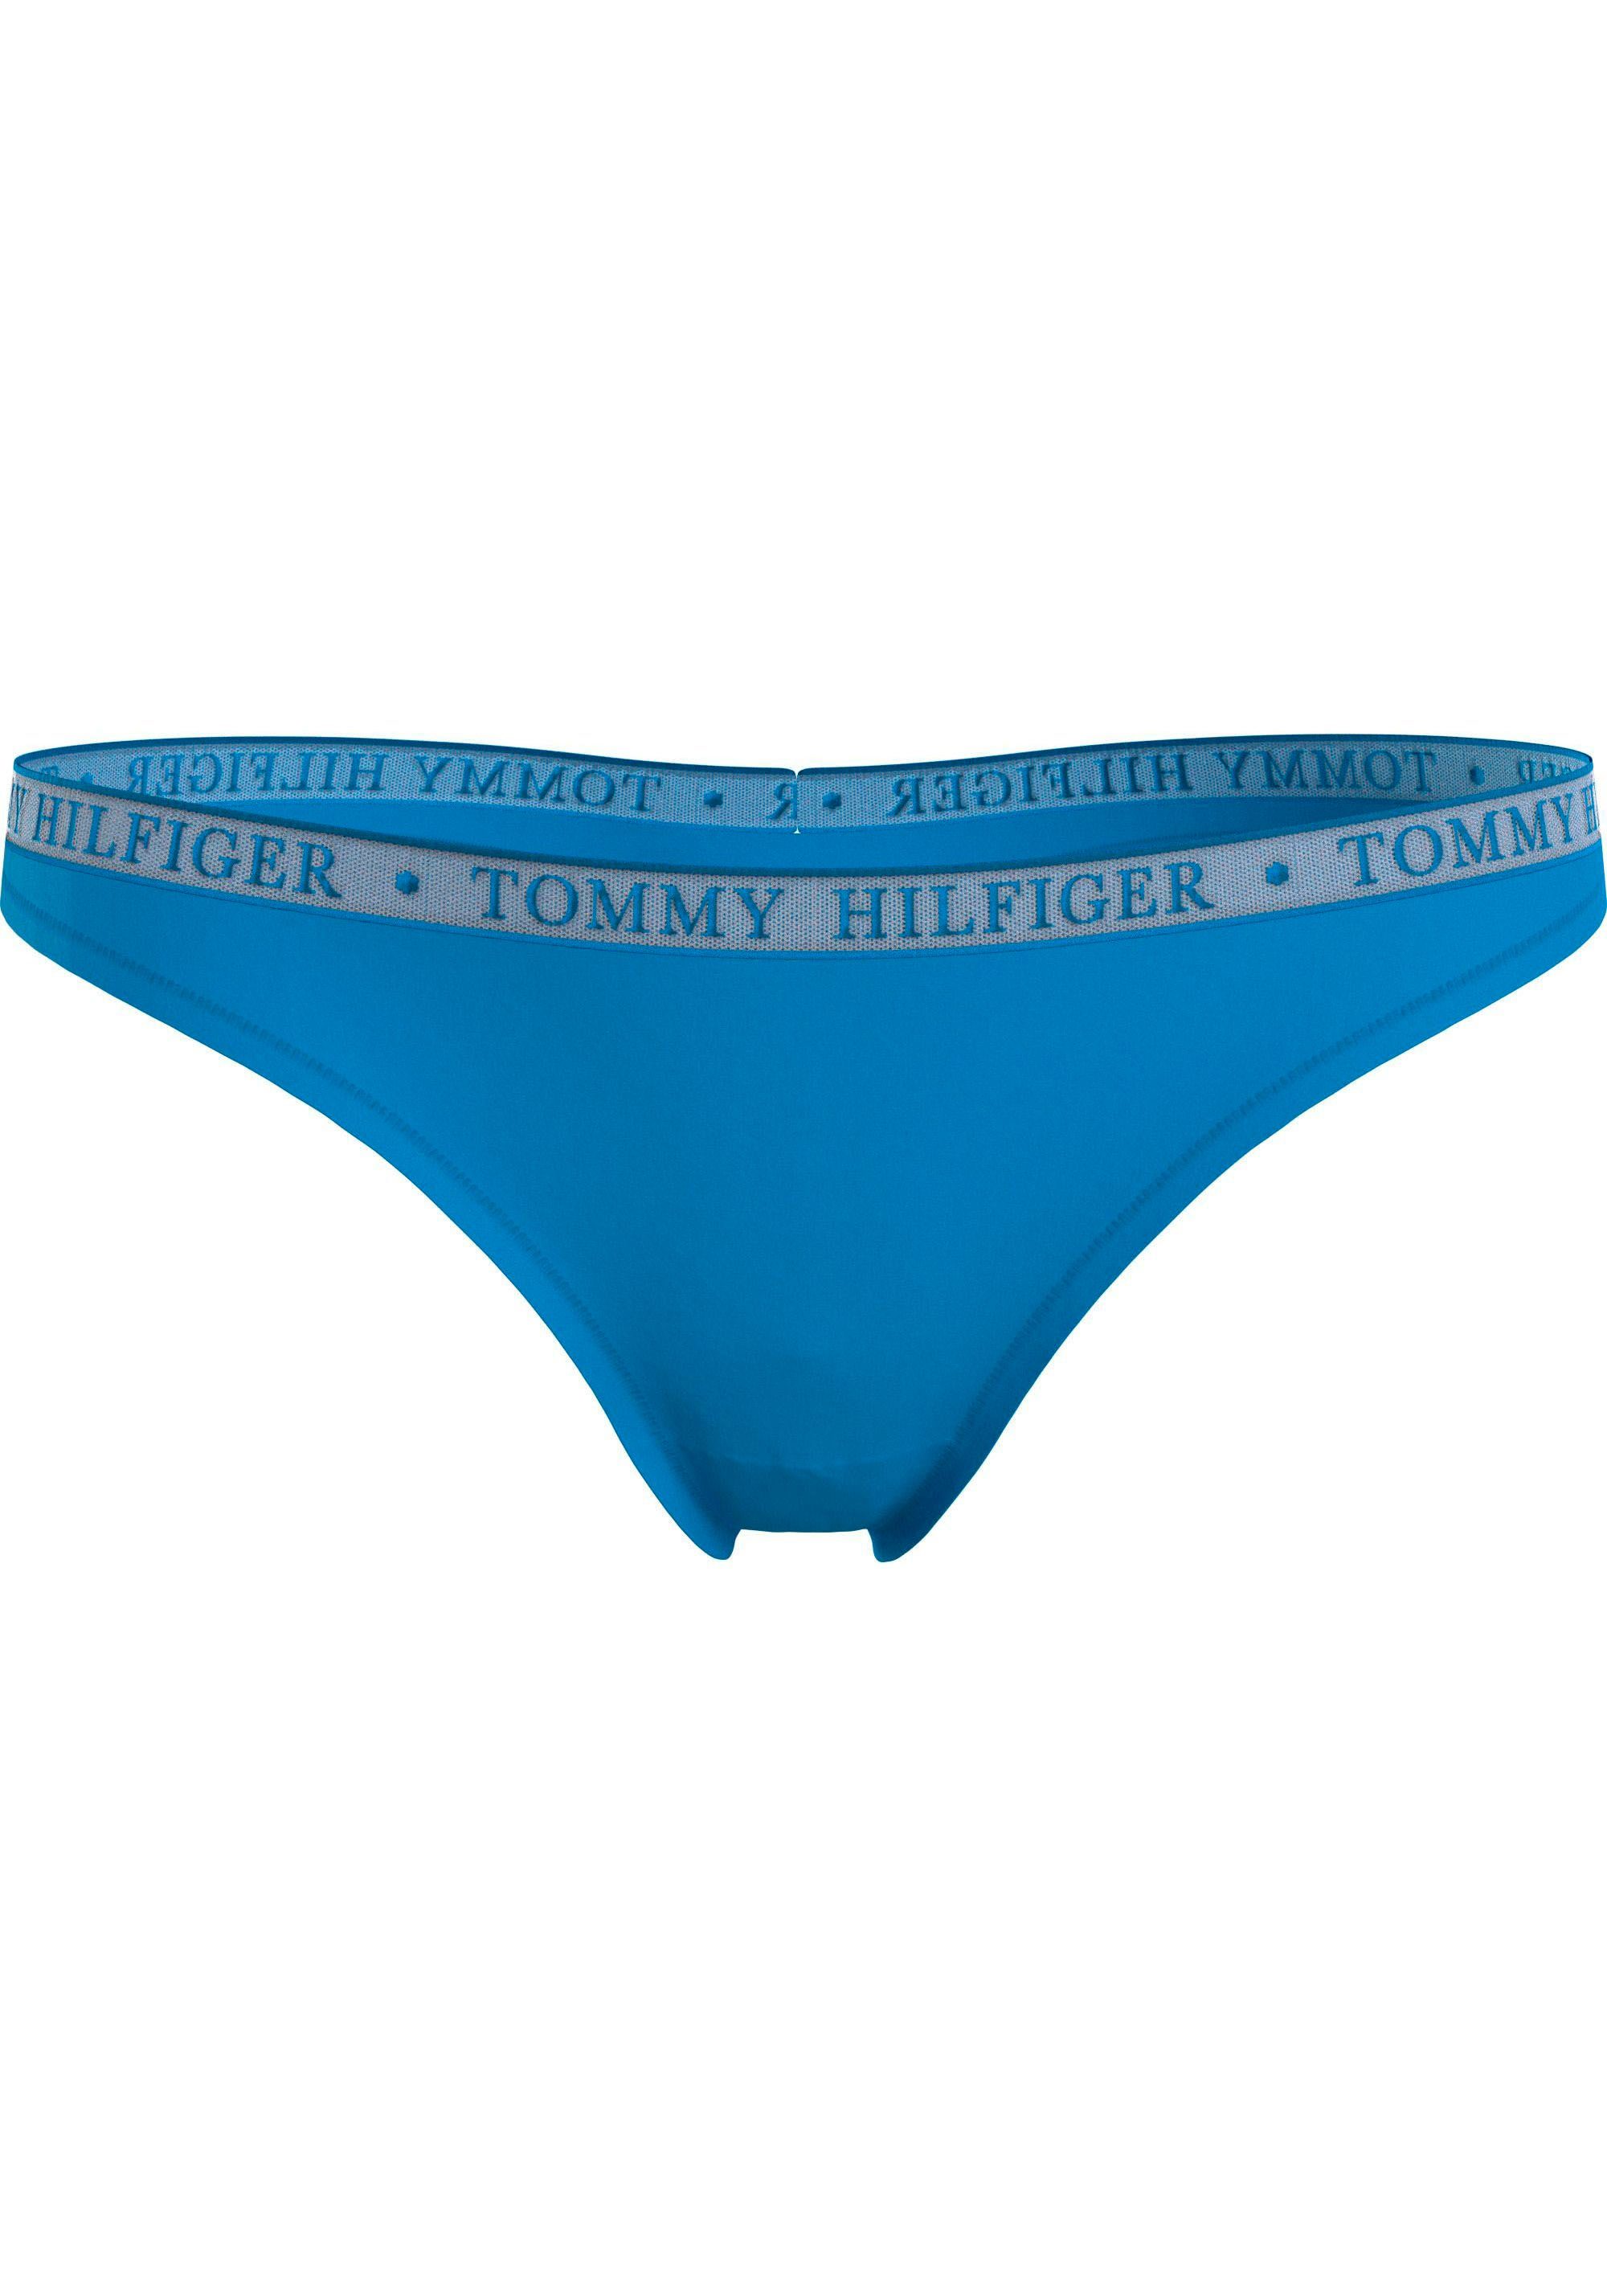 Hilfiger T-String Hilfiger Tommy LACE 3er-Pack) Logobund 3P (EXT THONG Tommy Pink_Dawn/Glam_Blue/Desert_Sky SIZES) mit (Packung, Underwear